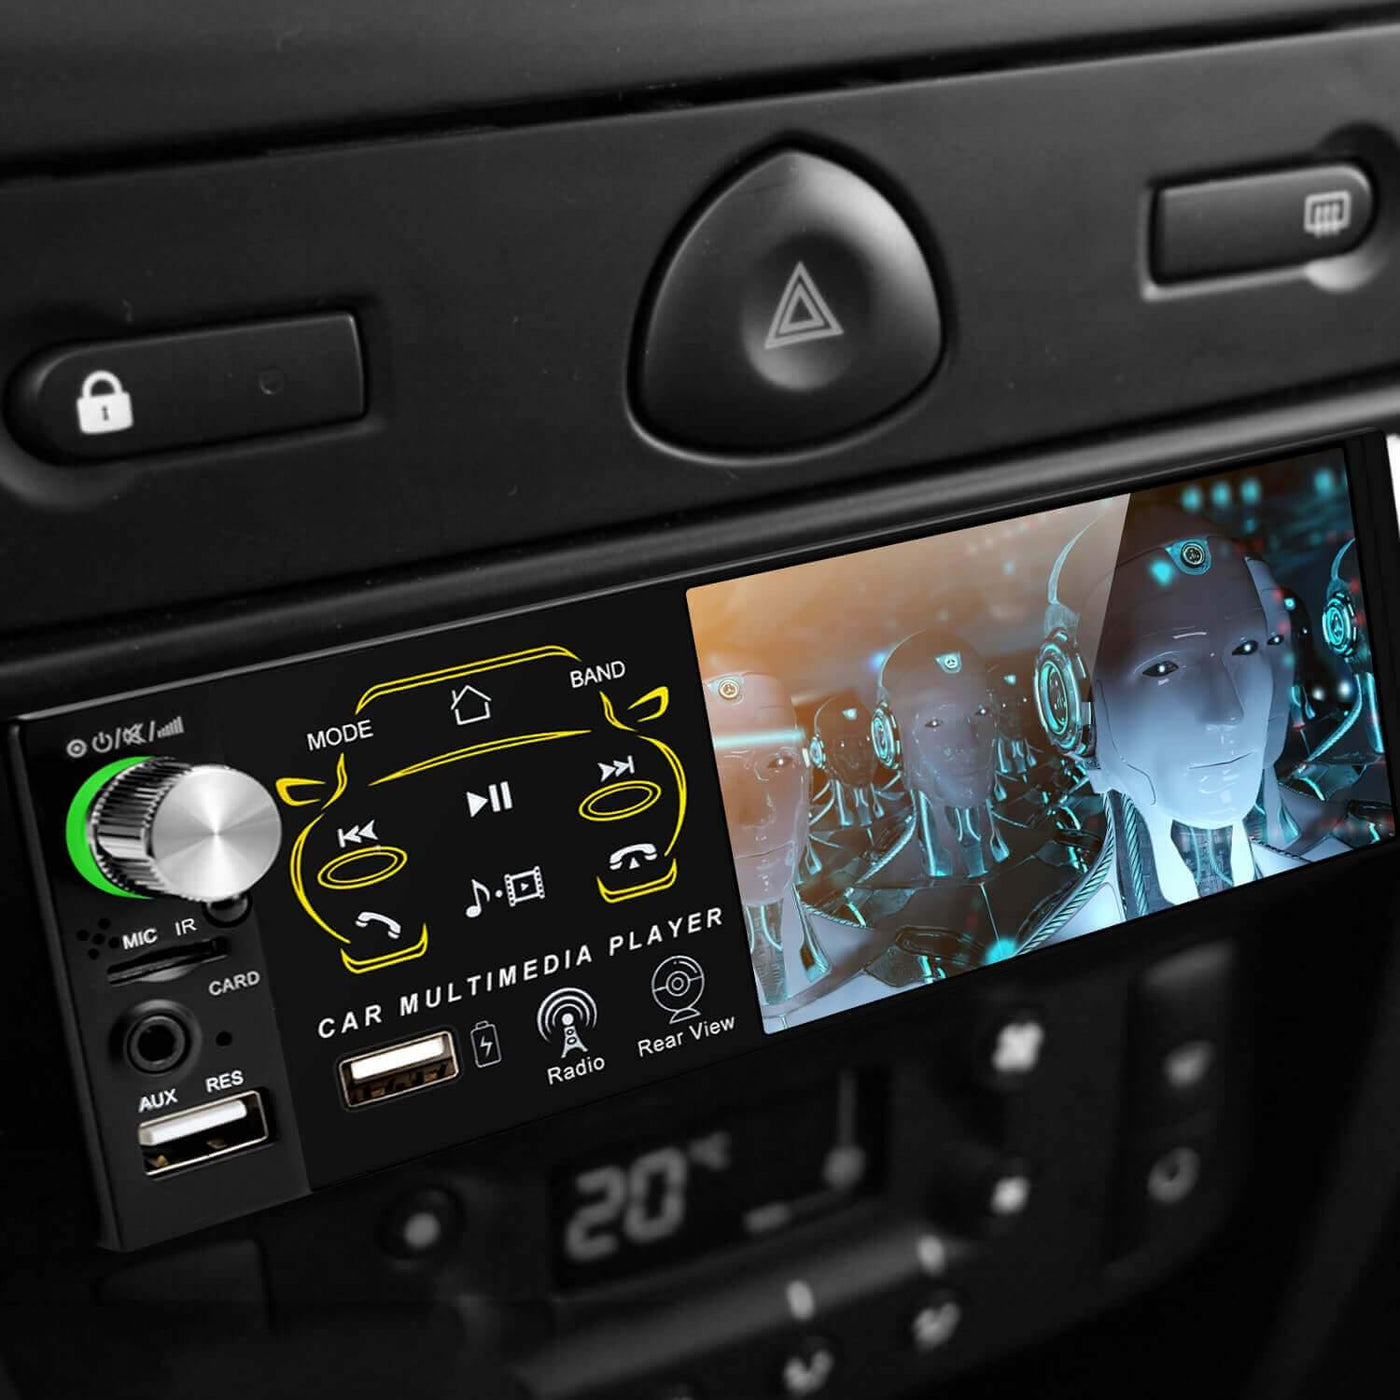 Autoradio mit Bluetooth, USB, AUX - 4-Zoll-Bildschirm